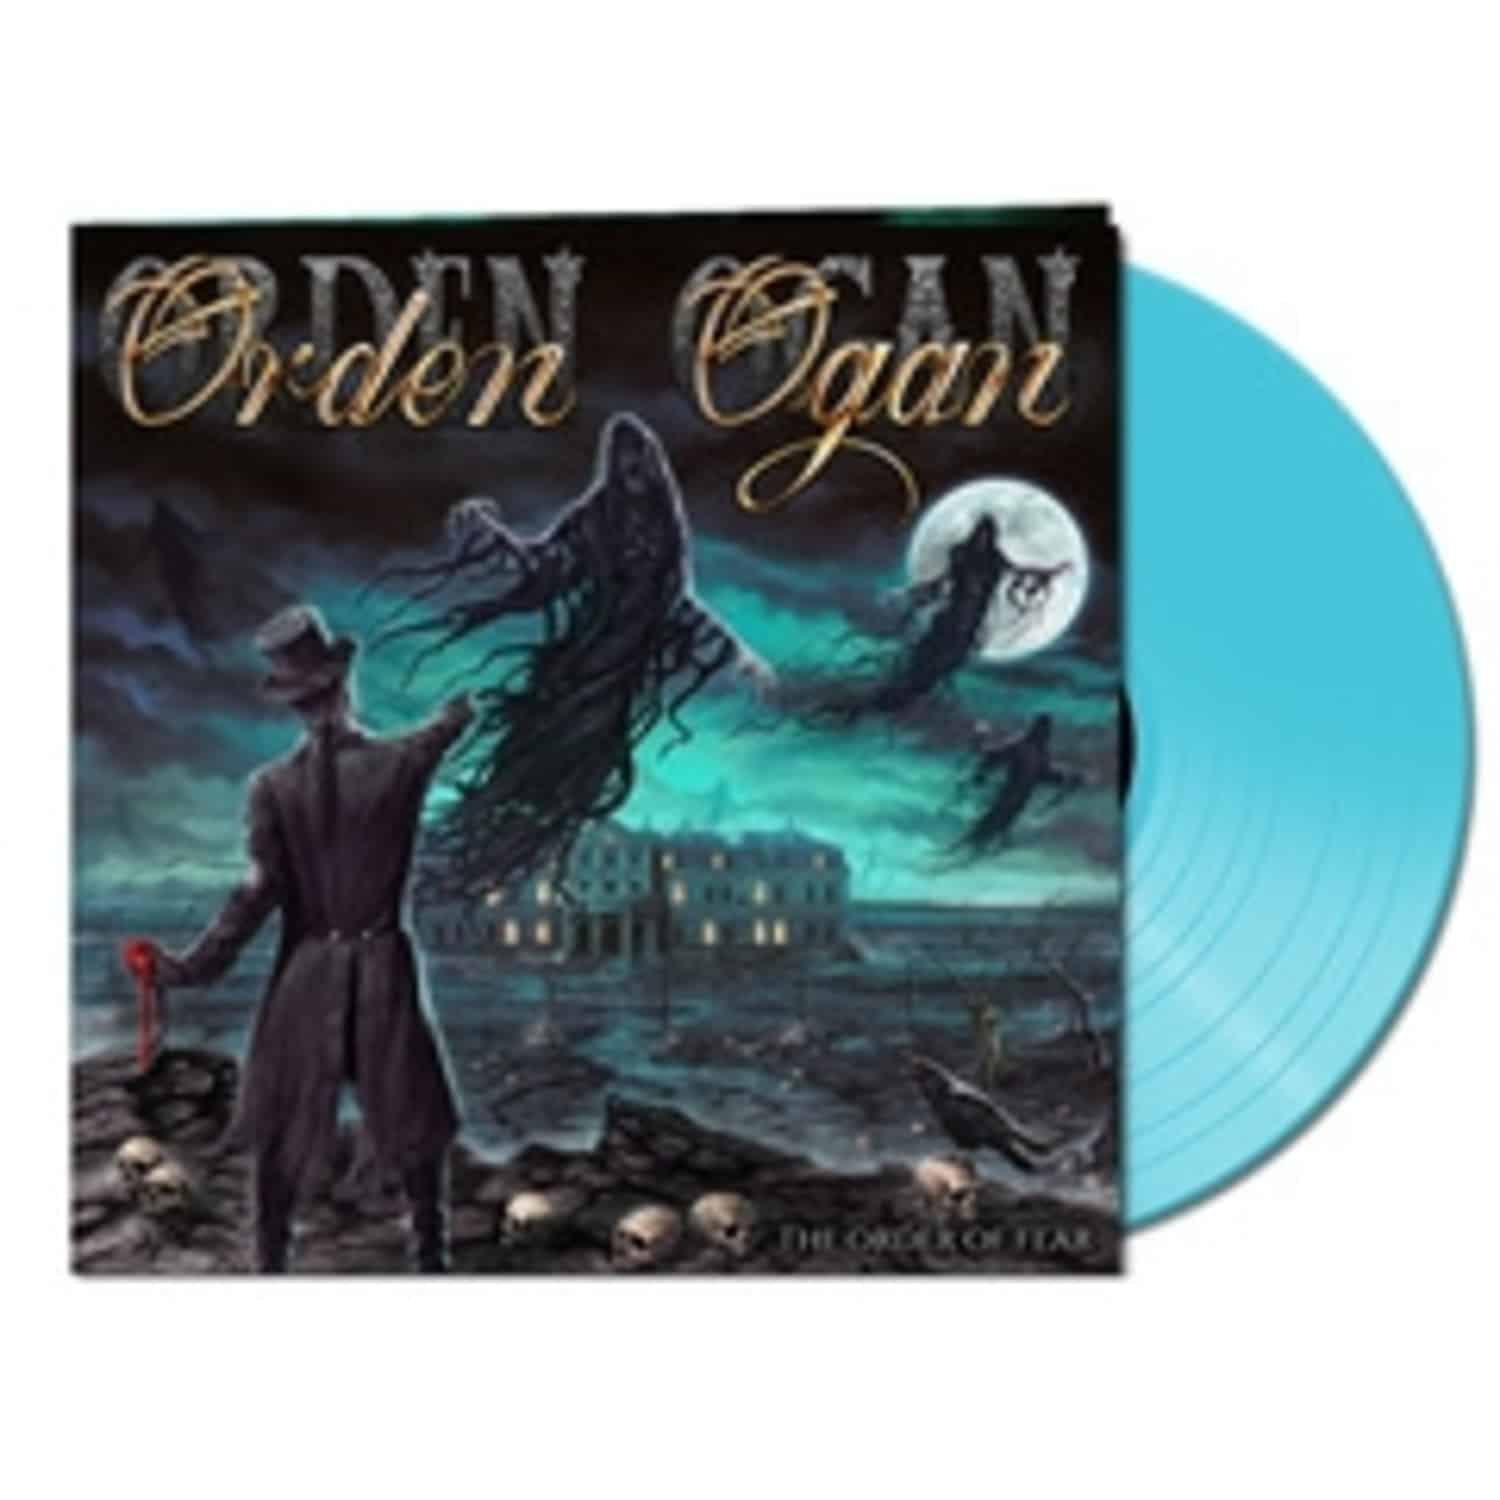 Orden Ogan - THE ORDER OF FEAR 